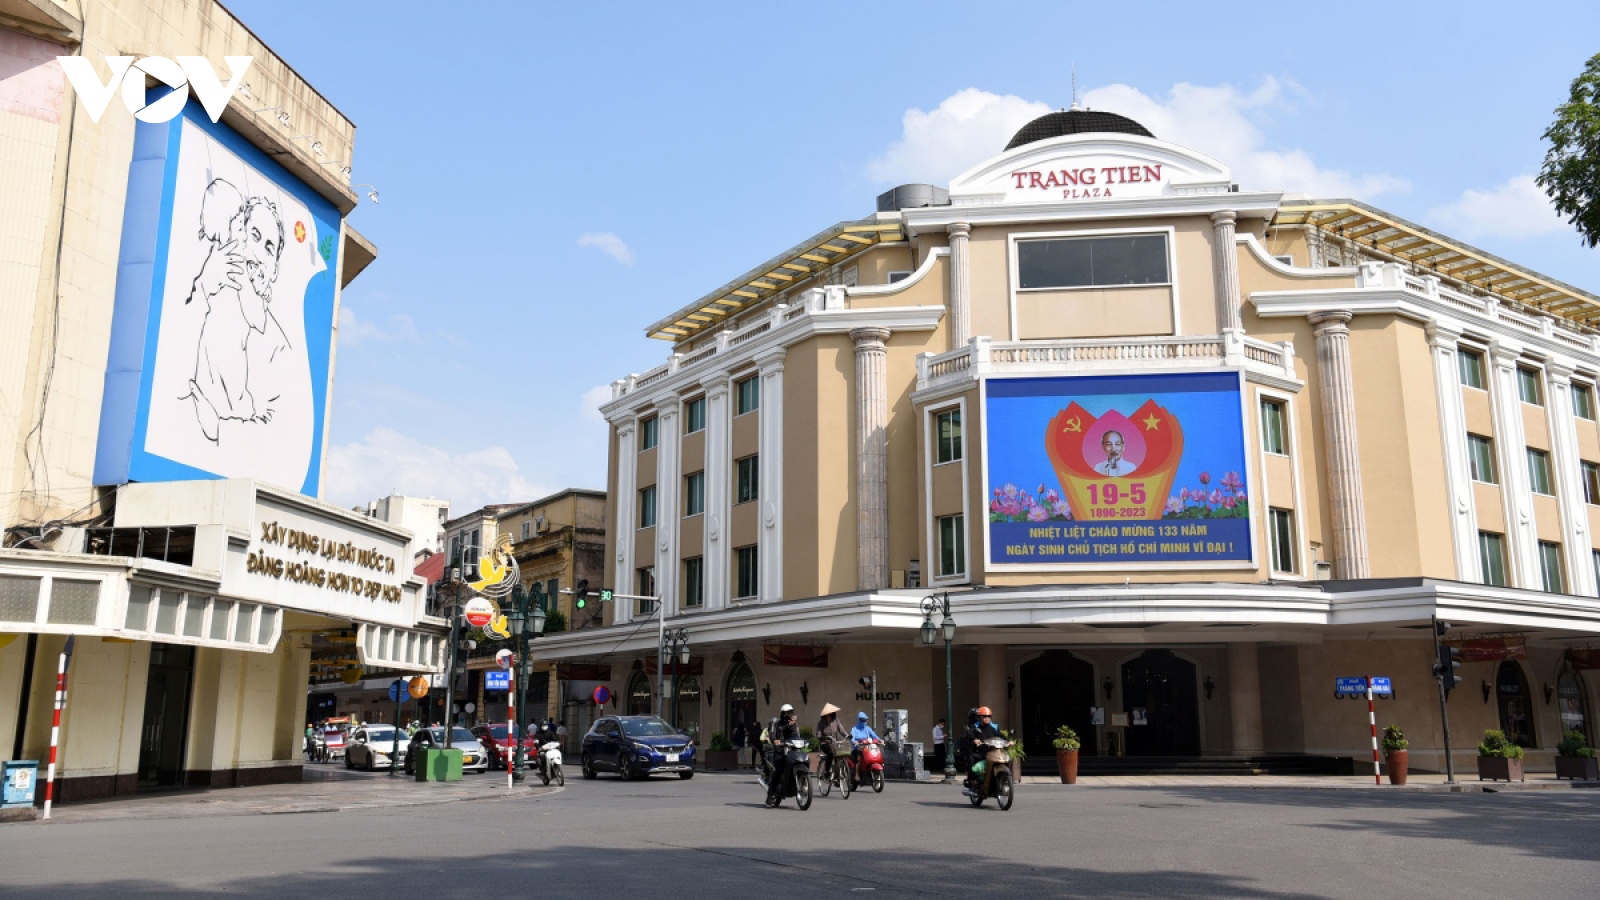 Hanoi streets brilliantly decorated for President Ho Chi Minh's birthday celebration